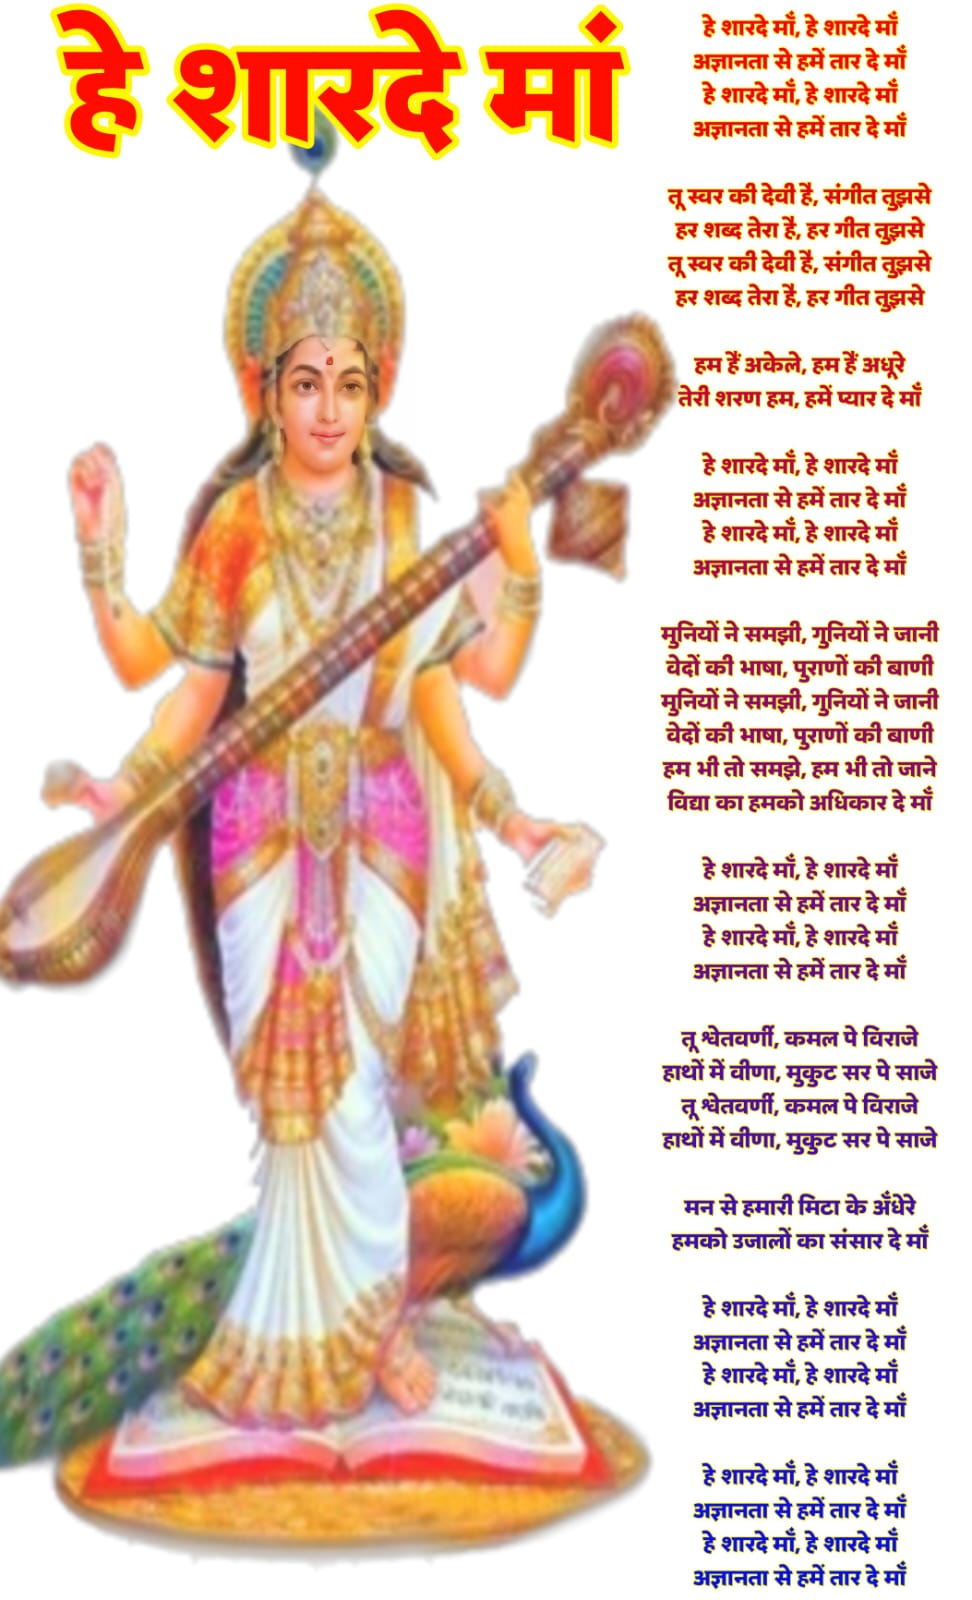 हे शारदे माँ लिरिक्स | He Sharde Maa Lyrics Image Download